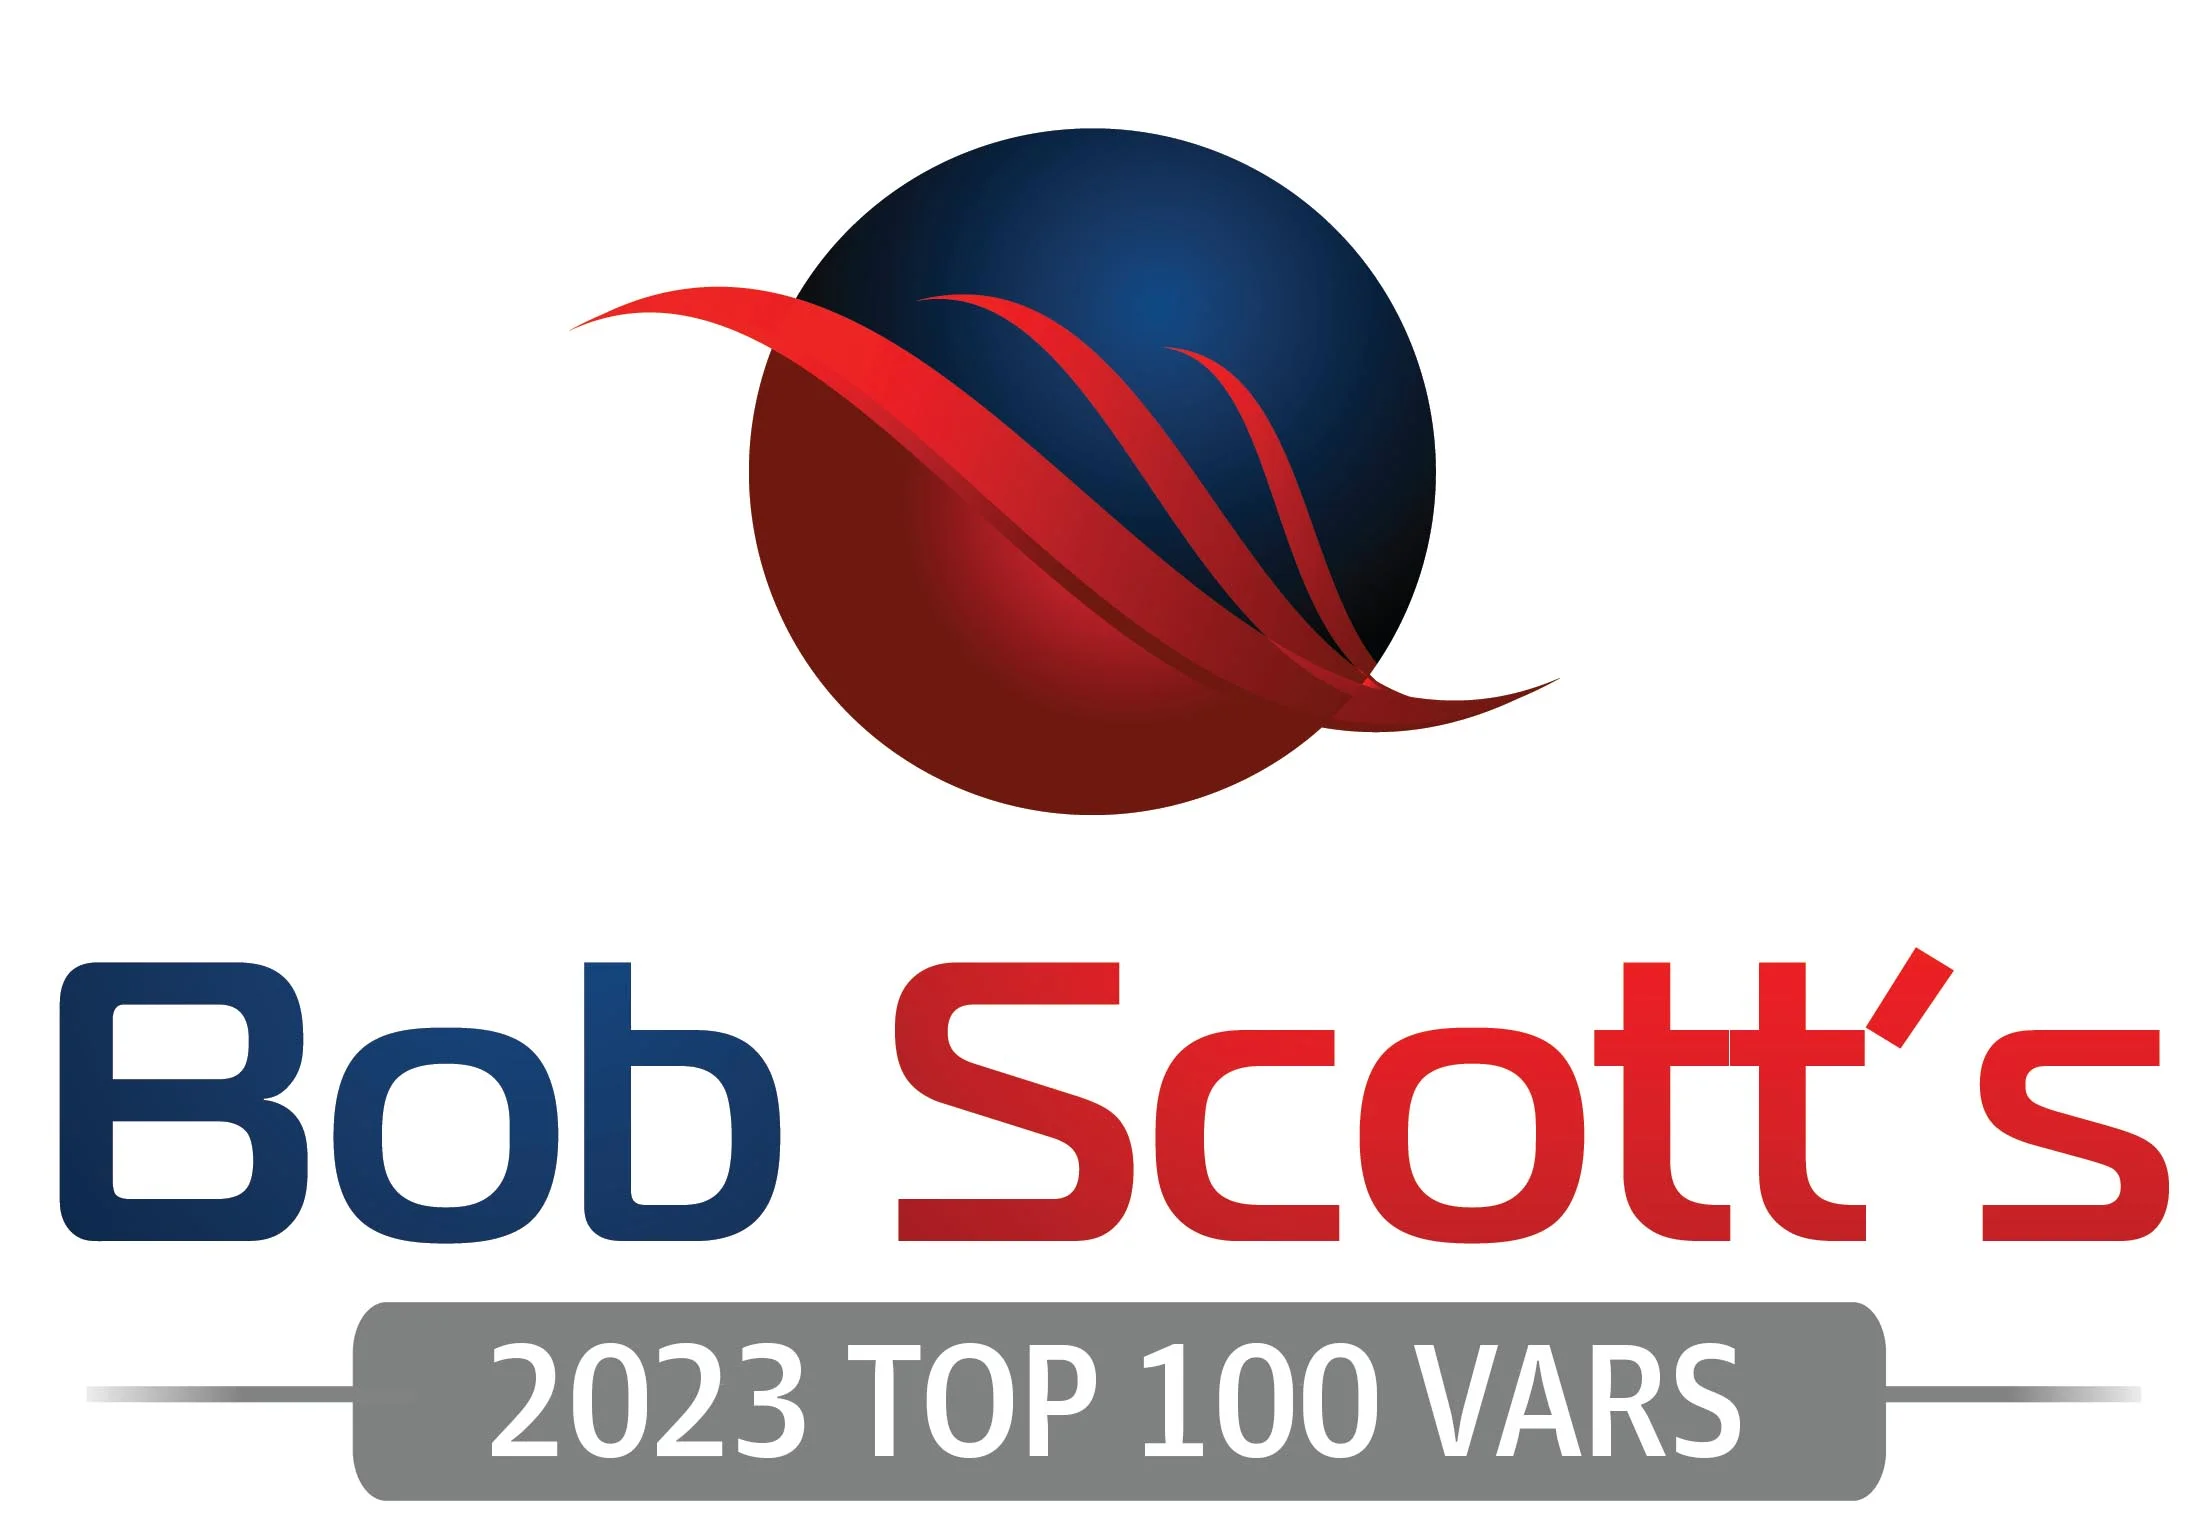 2023 Bob Scotts Top 100 logo-1